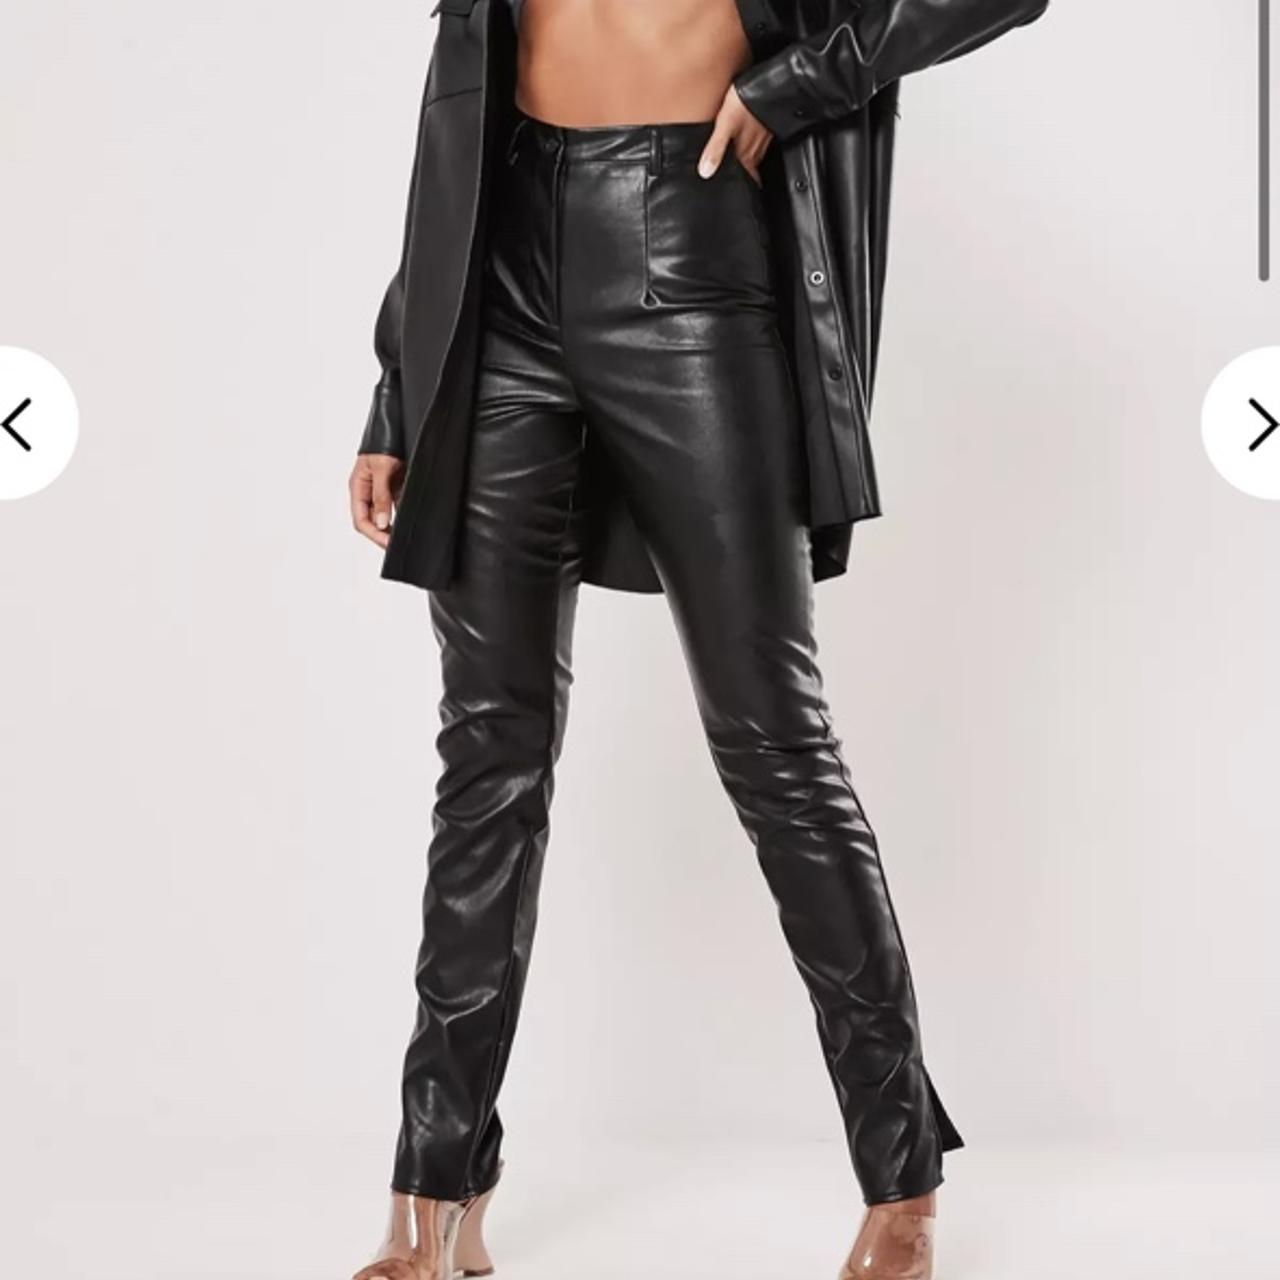 Fashion nova Chelsea legging set in black -1X - Depop